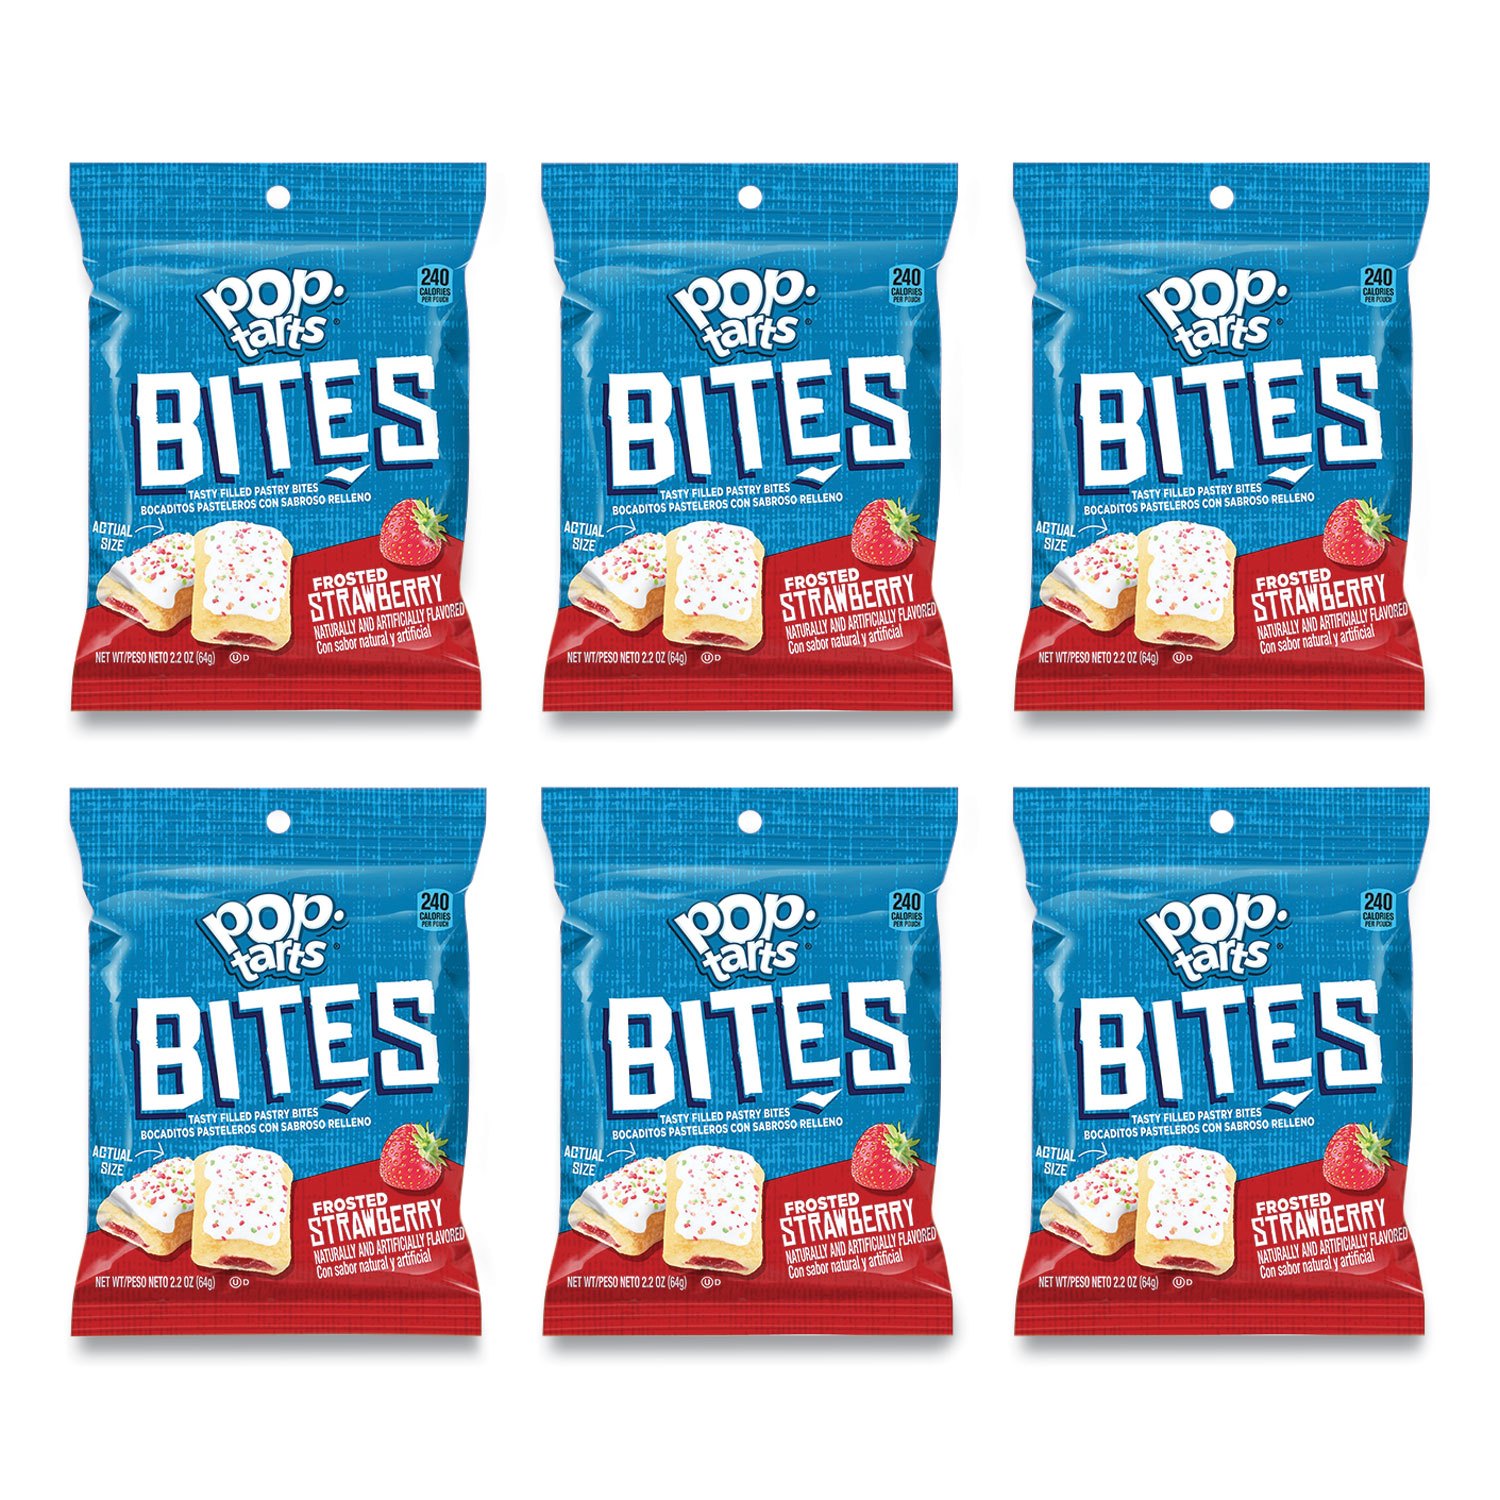  Kellogg's KEE20314 Pop Tarts Bites, Frosted Stawberry, 2.2 oz Bag, 6 Bags/Box (KEB24422592) 